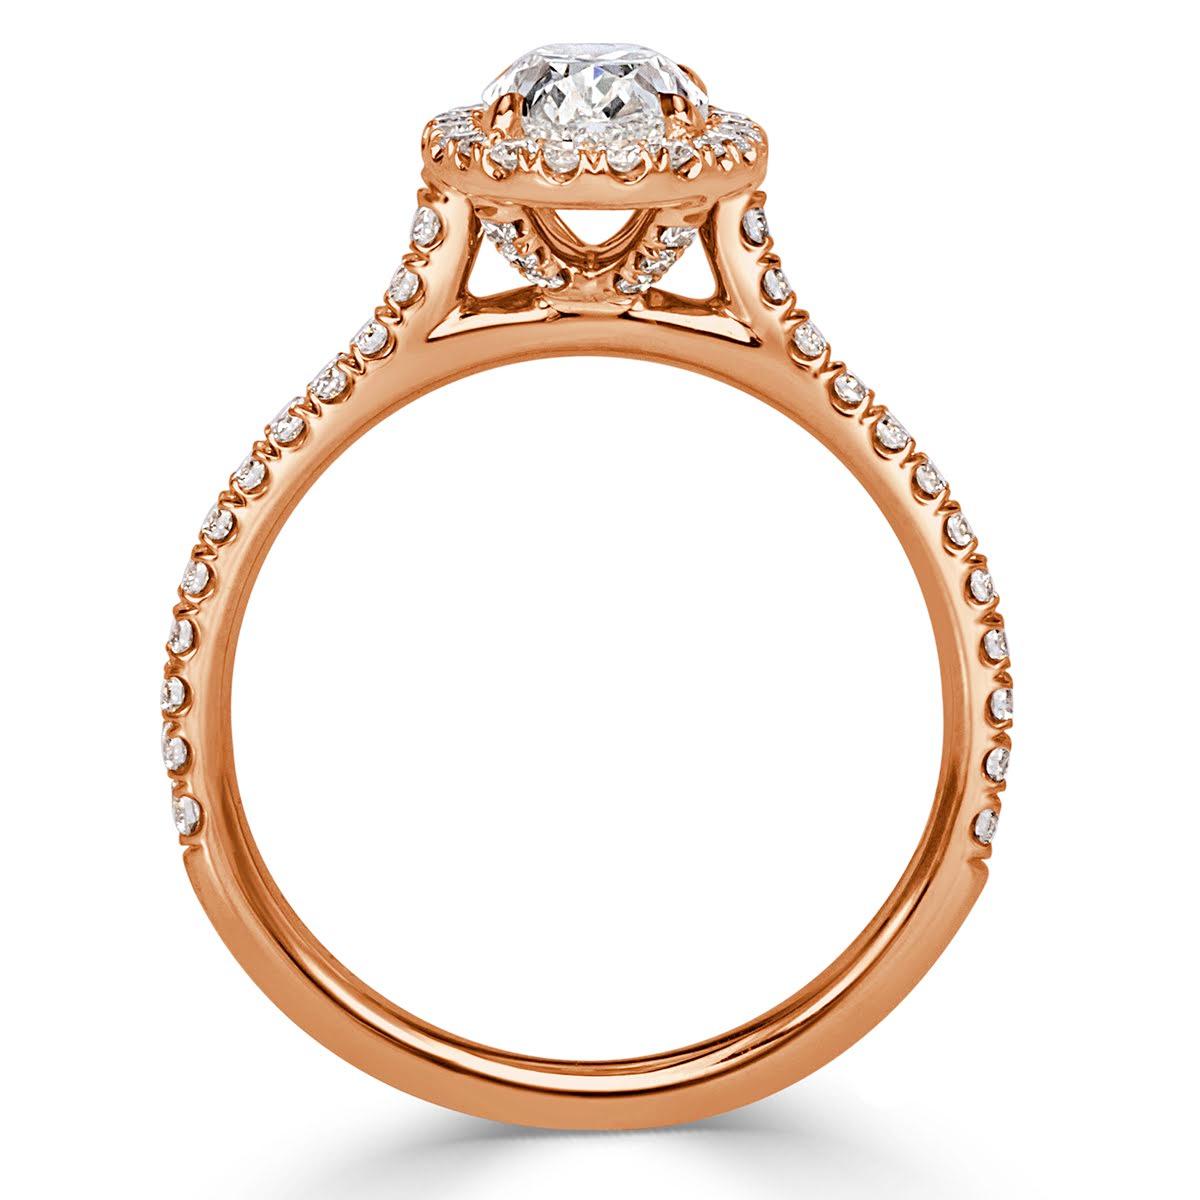 Women's or Men's Mark Broumand 1.47 Carat Oval Cut Diamond Engagement Ring